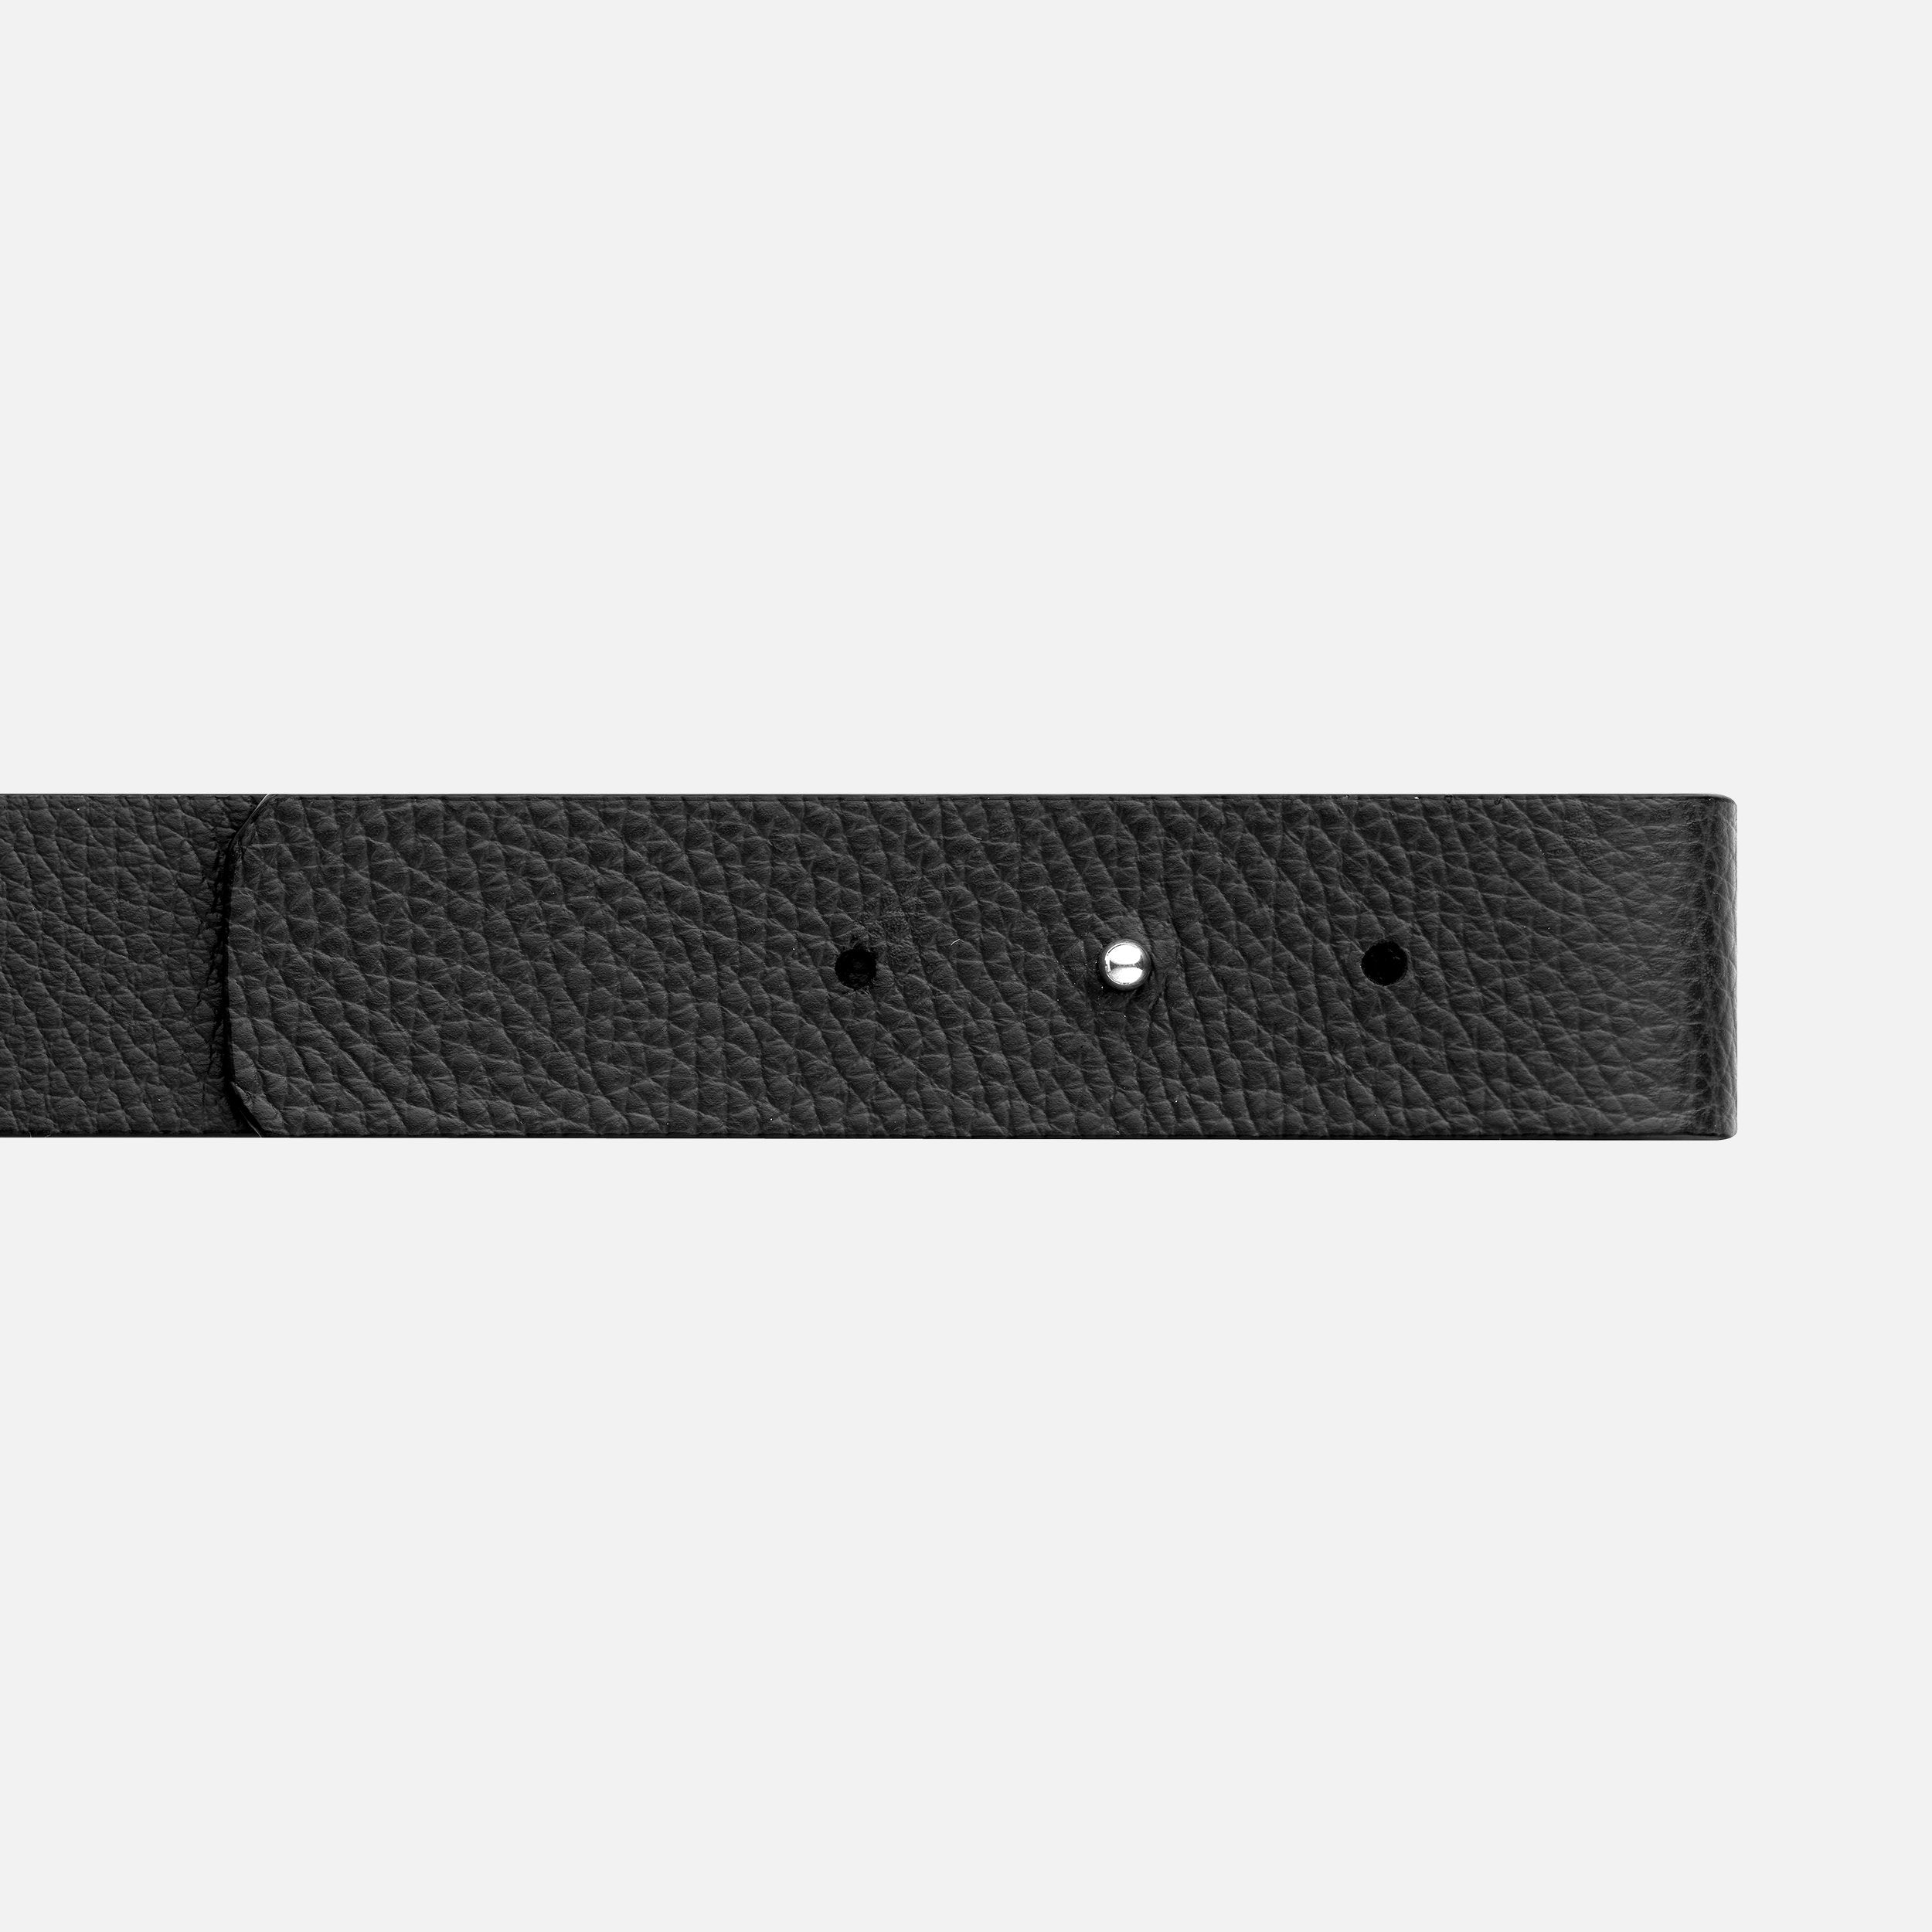 M LOCK 4810 buckle grainy black 35 mm leather belt